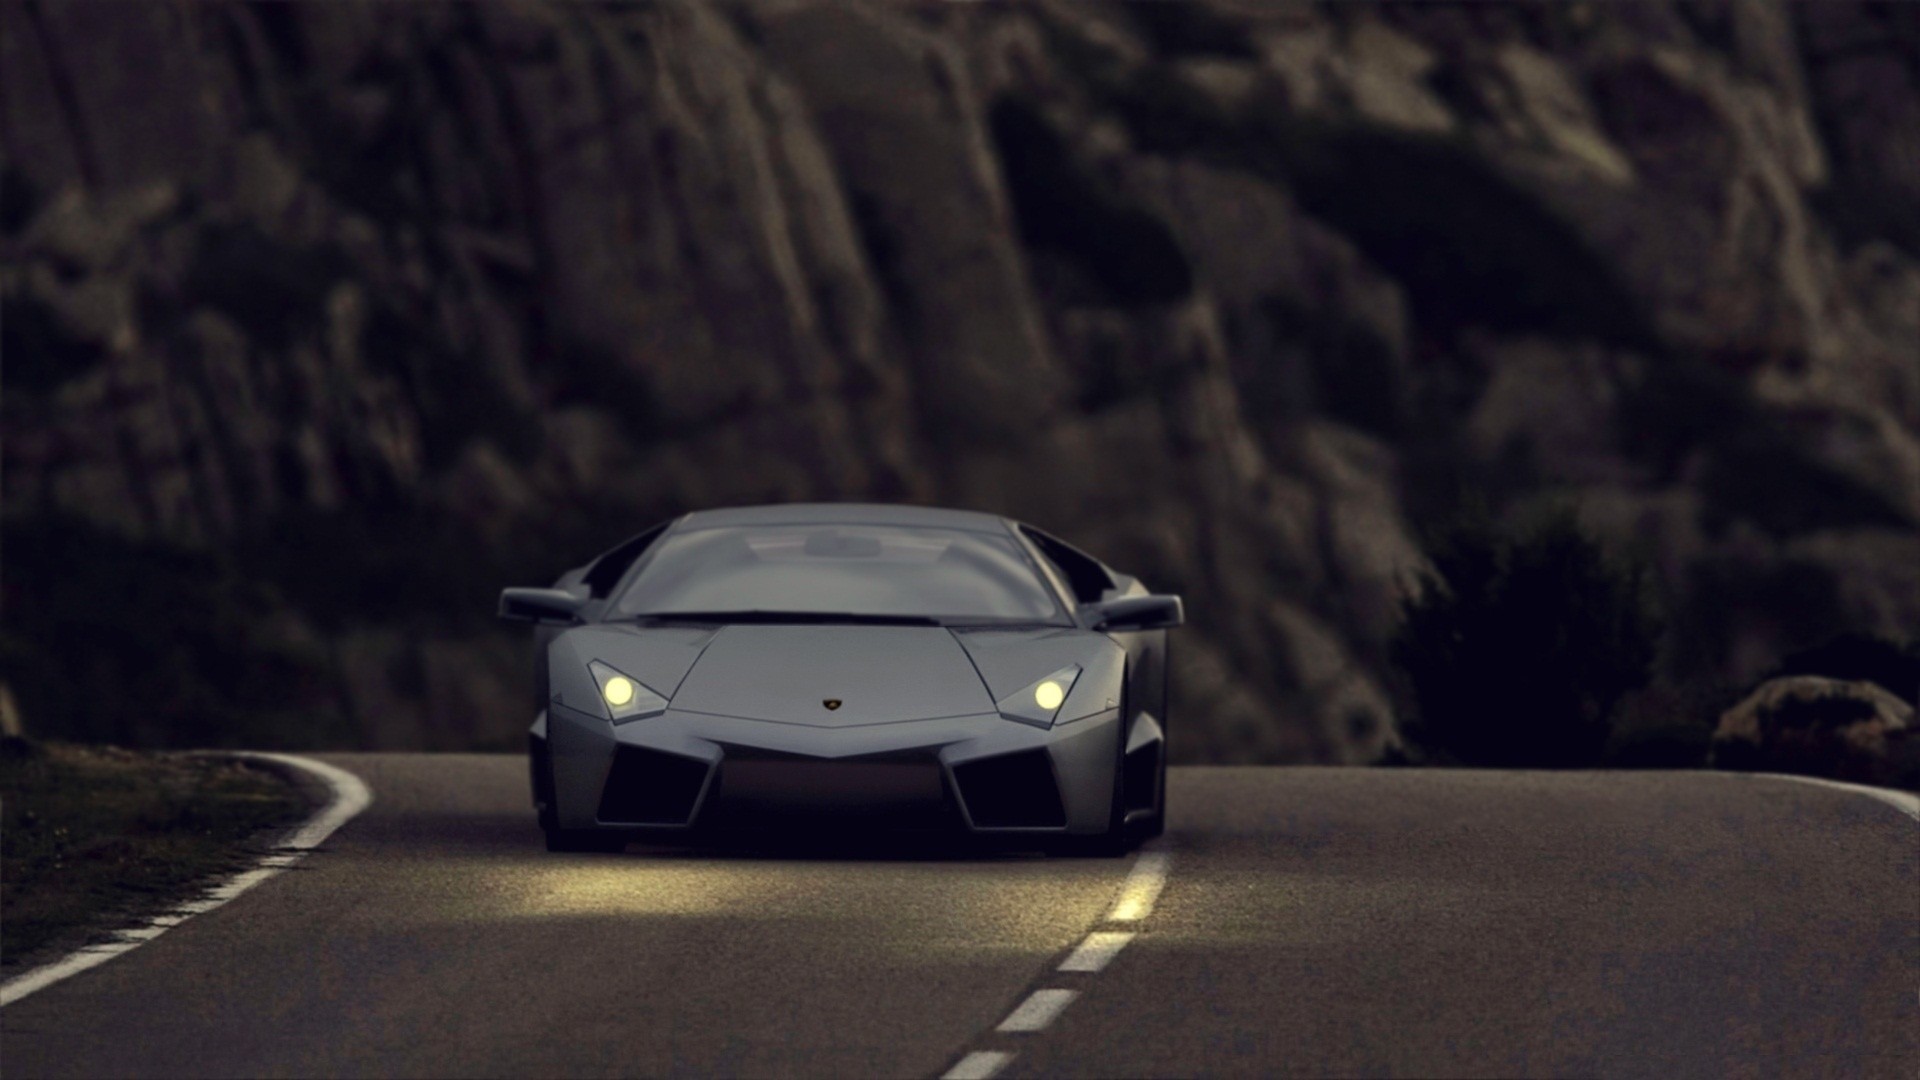 Lamborghini Veneno Hd Wallpaper Download